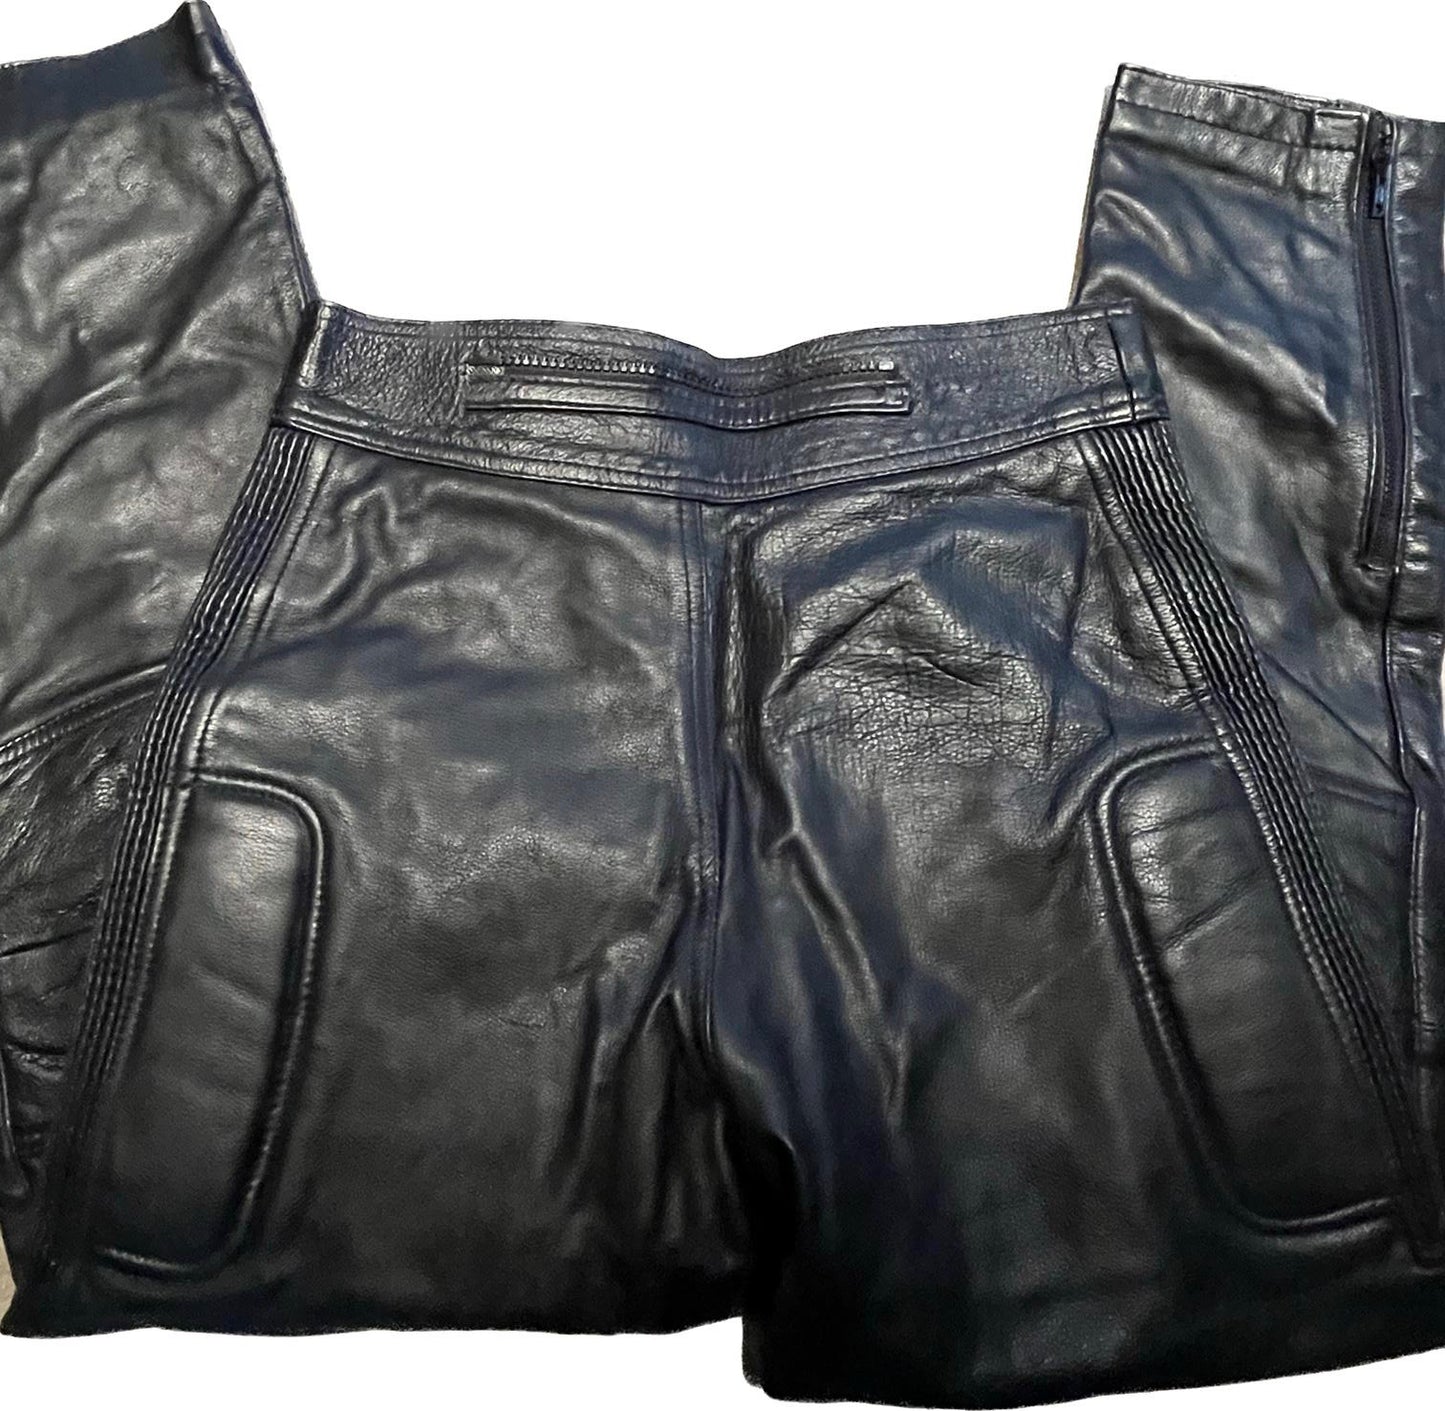 SKIN Leather Biker Trousers - size UK34 - Pre-loved